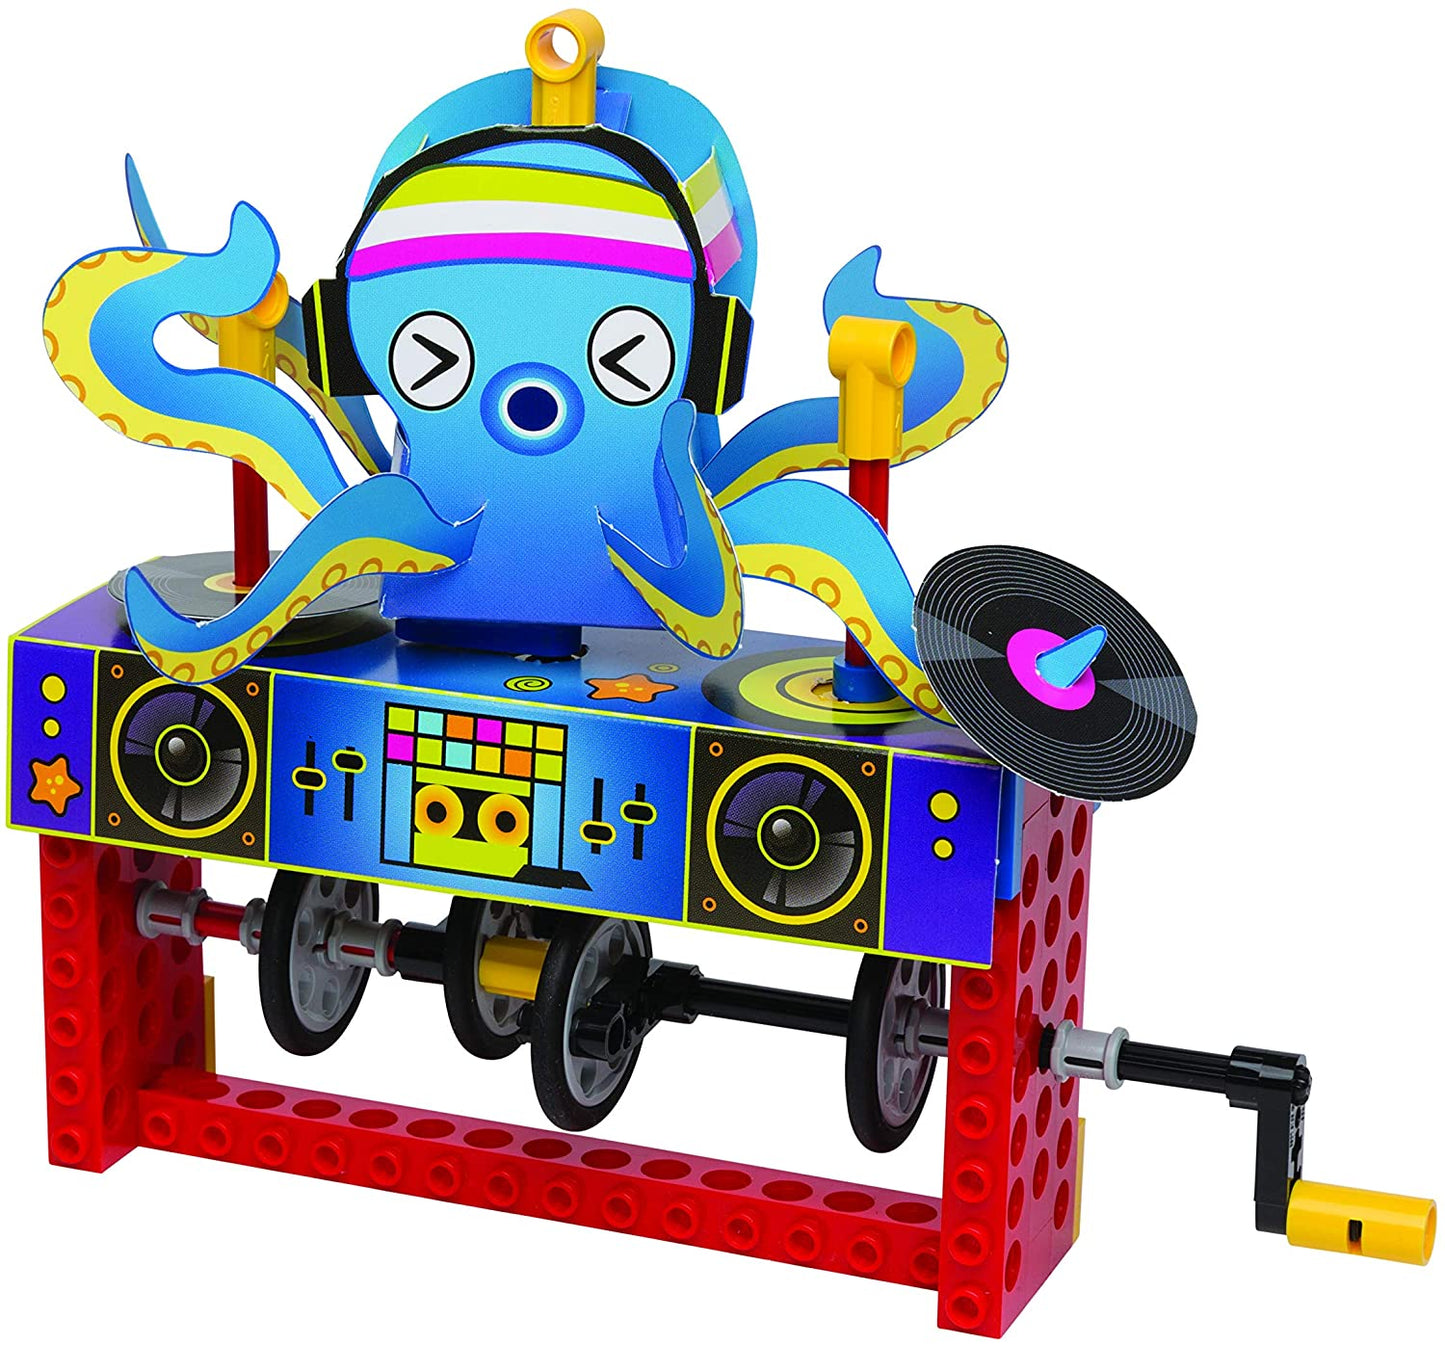 LEGO Gear Bots Science/STEM Activity Kit - from Klutz